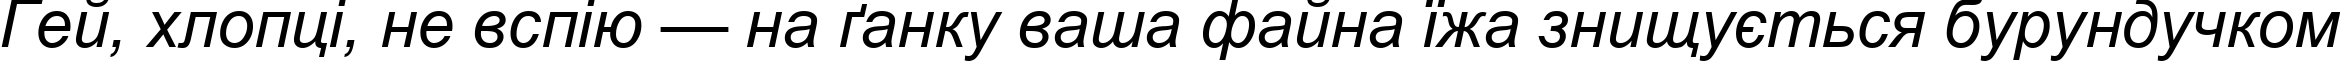 Пример написания шрифтом Arial Cyr Italic текста на украинском